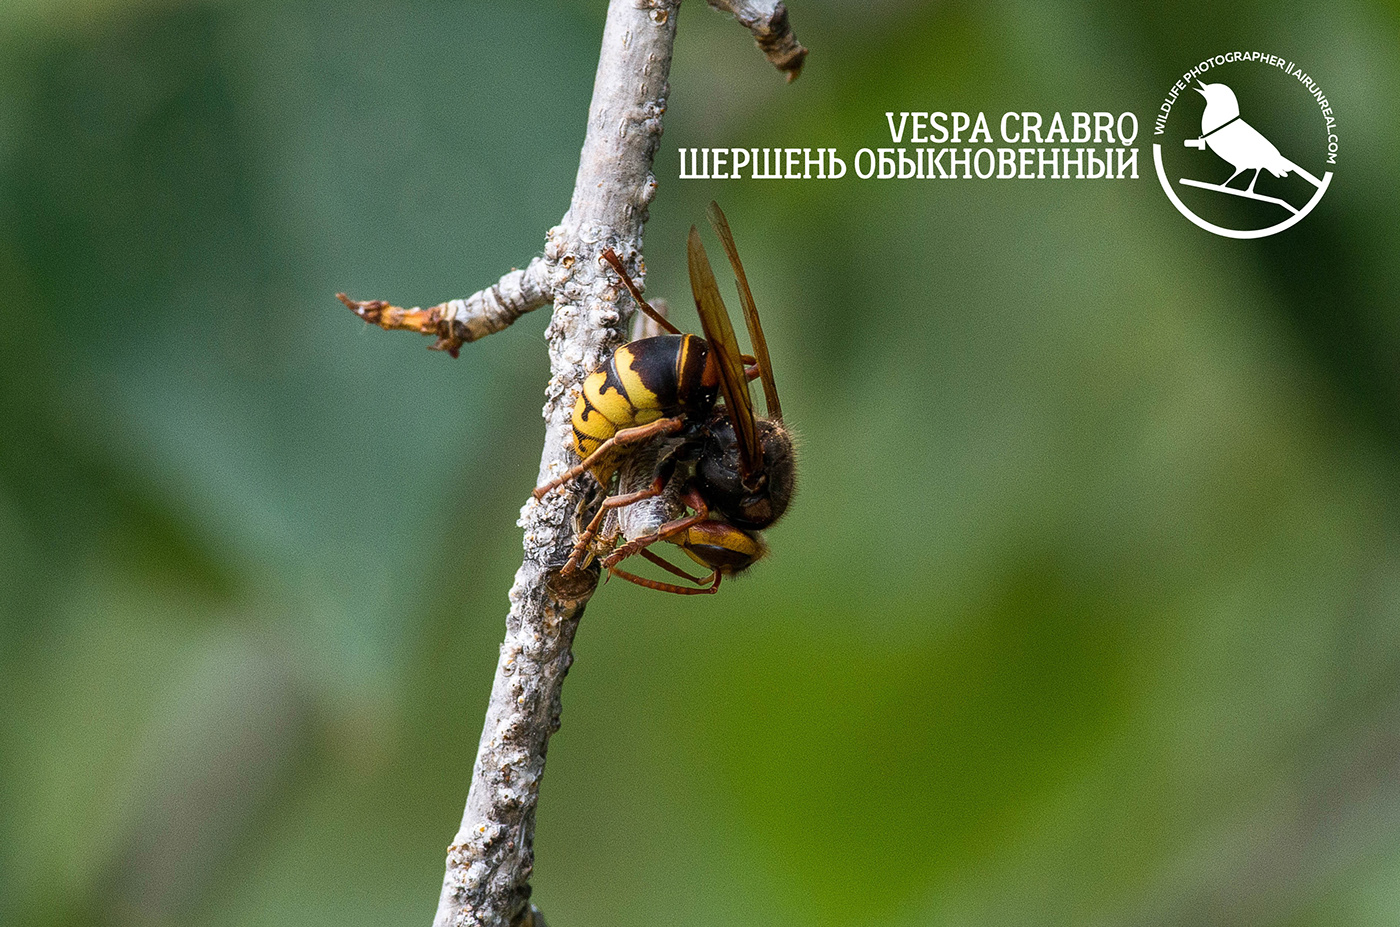 Vespa crabro insect Insects volgograd Russia wildlife macro macrp photo European hornet hornet